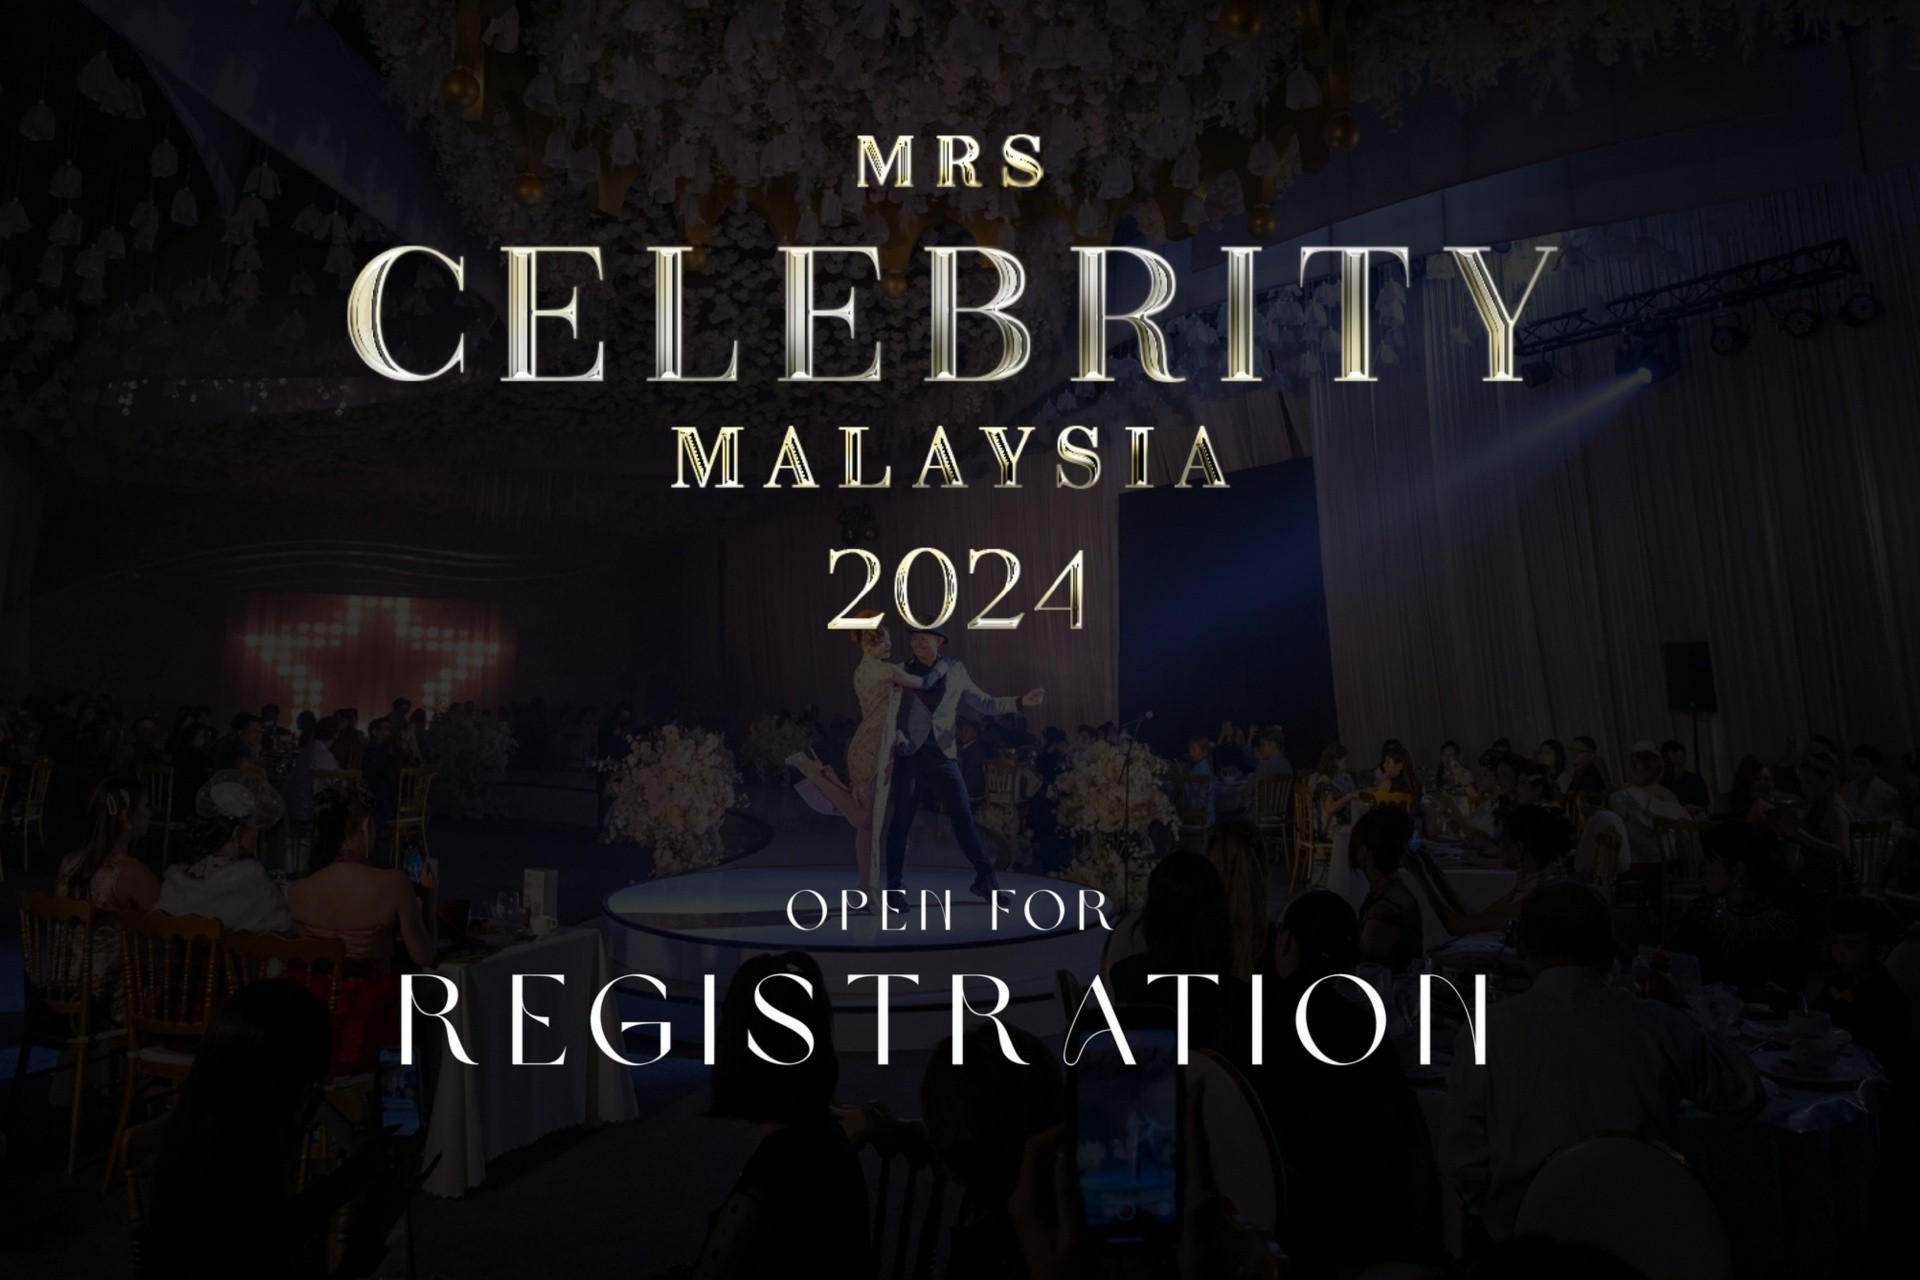 Mrs Celebrity Malaysia 2024 registration opens